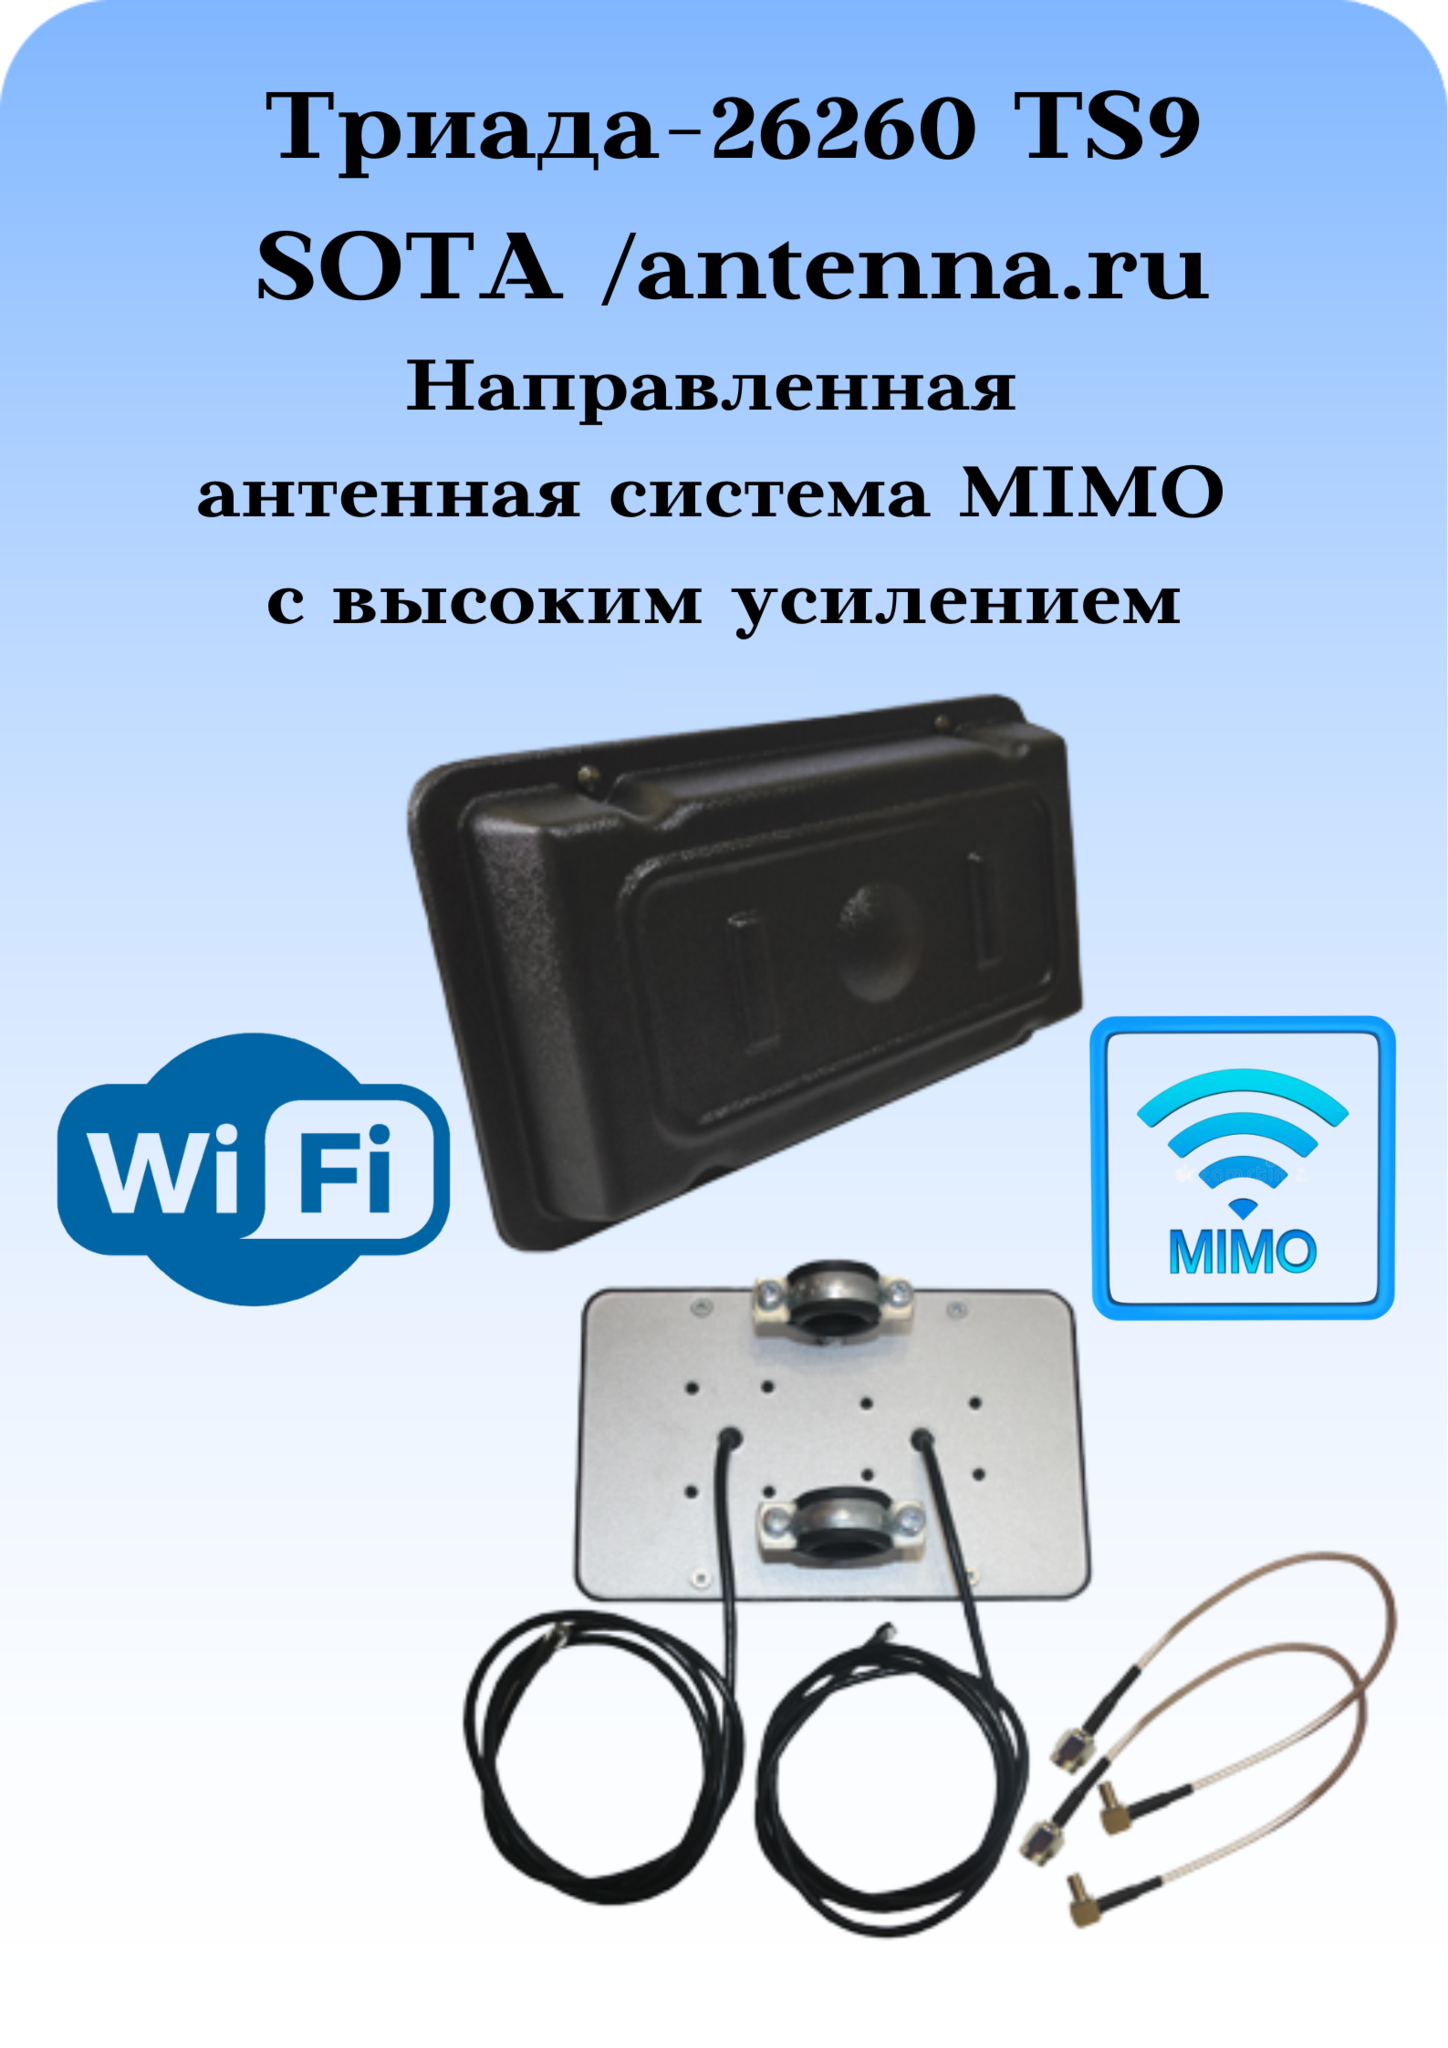 Триада-26260-TS9/antenna.ru. Антенна MIMO 3G/4G направленная на кронштейн с большим усилением